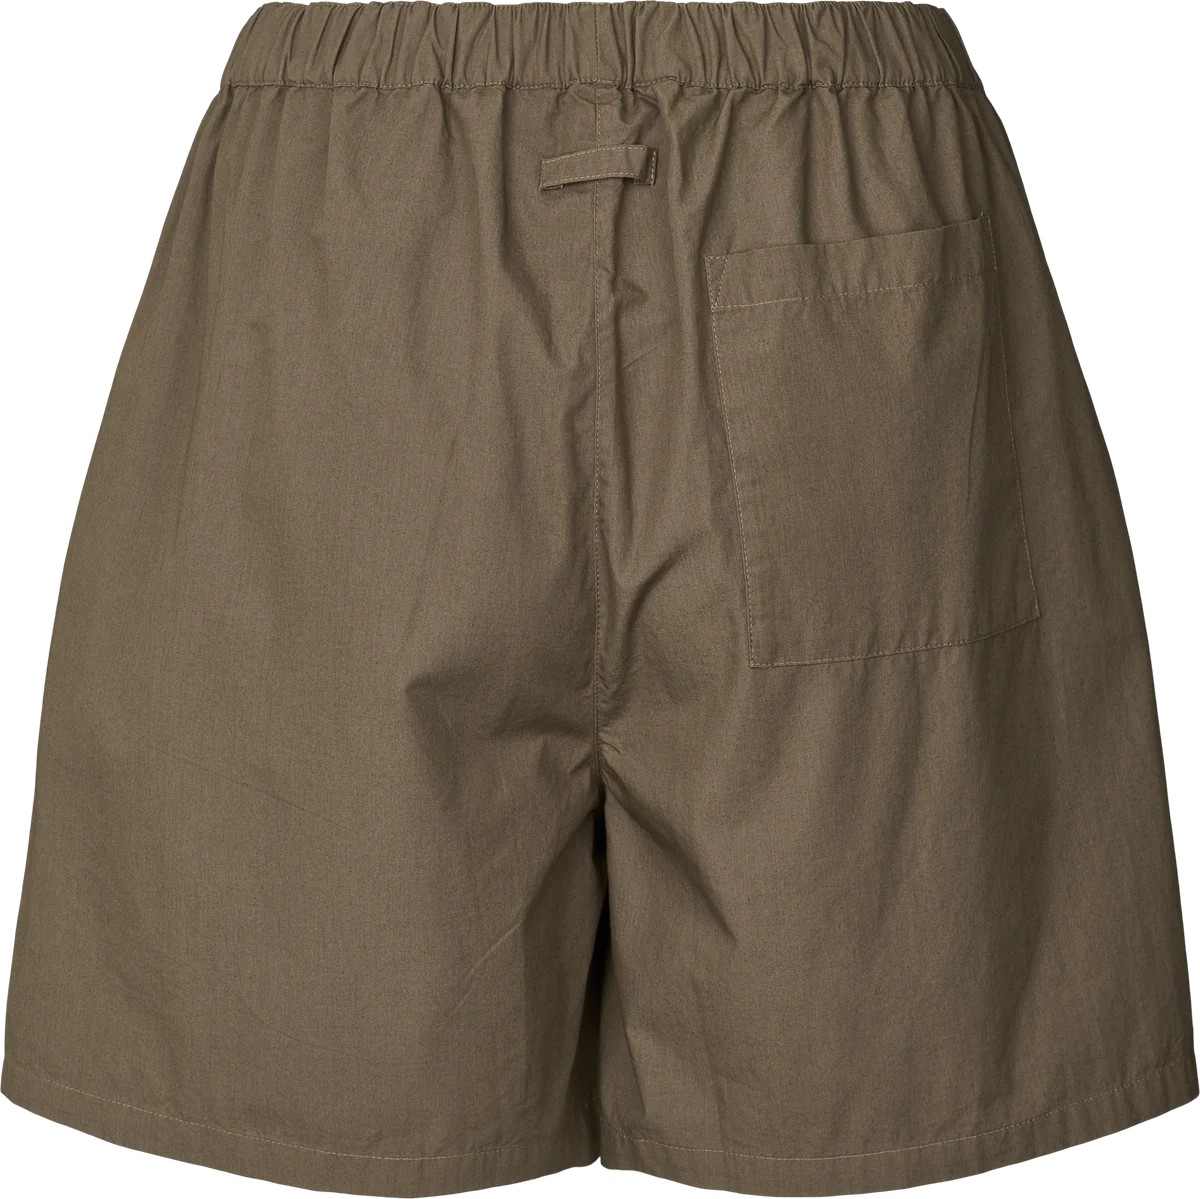 Shorts - Caroline, Bungee Cord